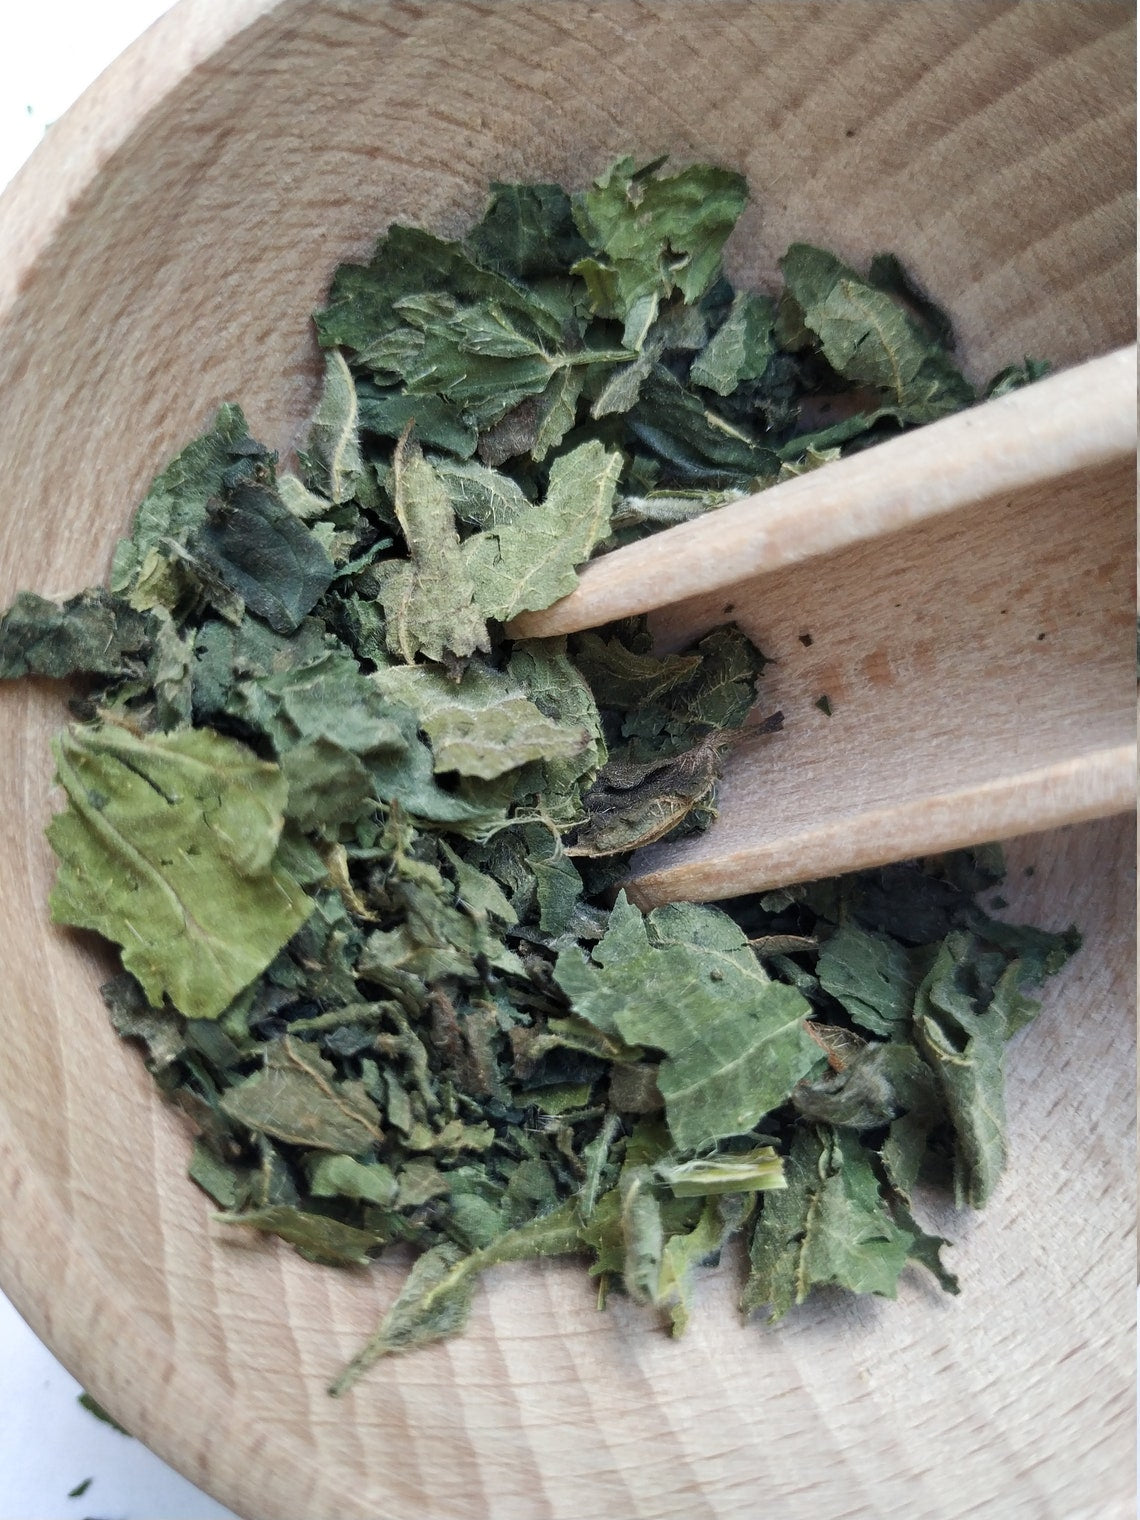 Stinging Nettle Leaf | Urtica Dioica | Nettle leaf Tea | Nettle Leaf Herb